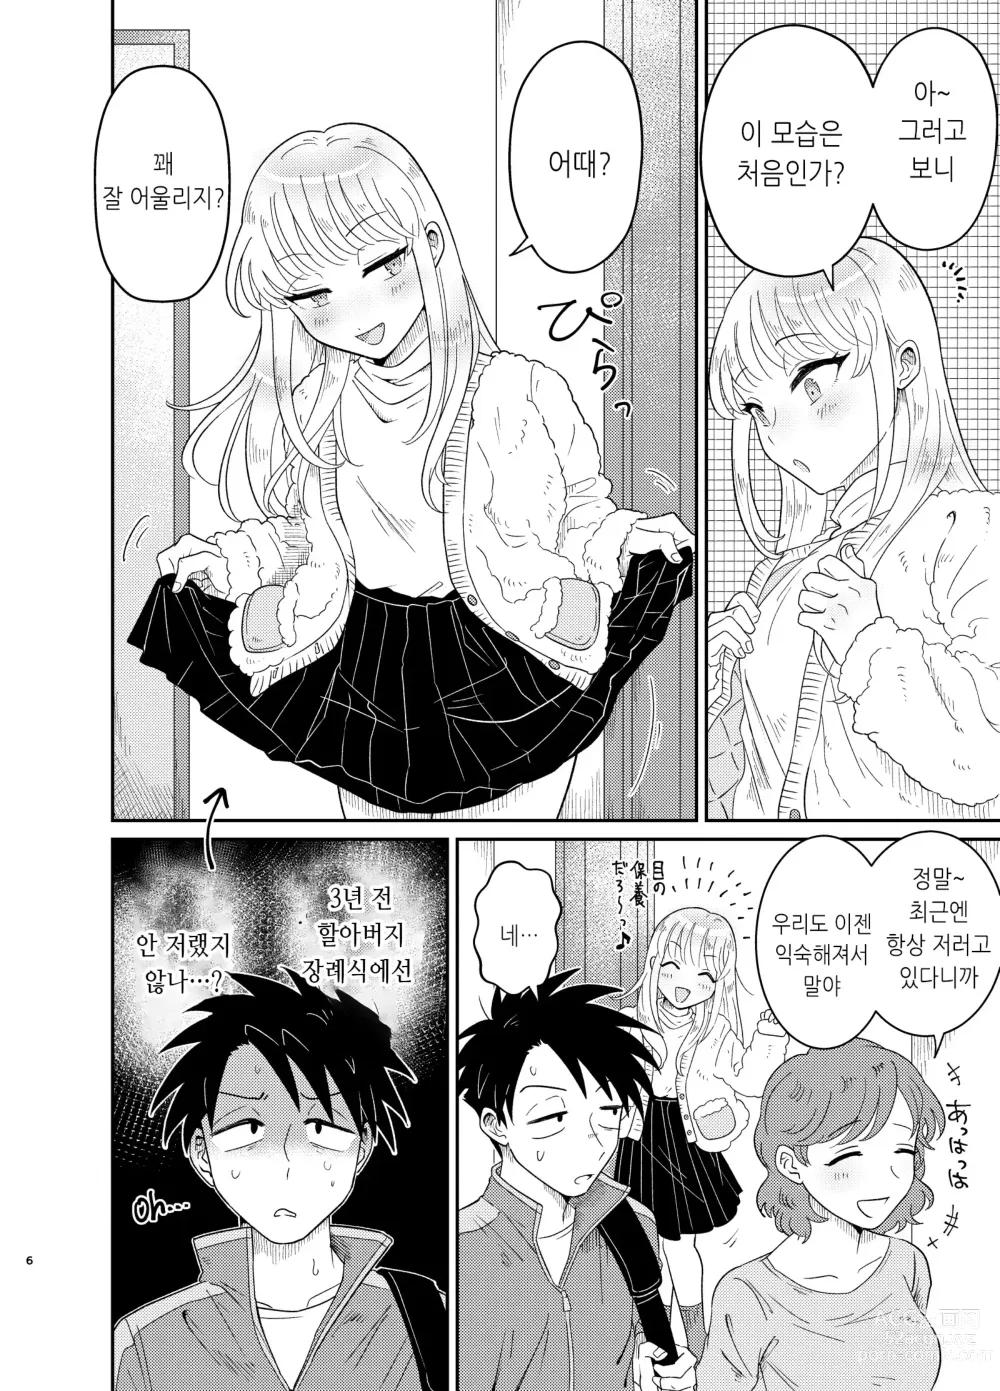 Page 6 of doujinshi 엄청 귀엽고 야한 사촌은 좋아하세요?